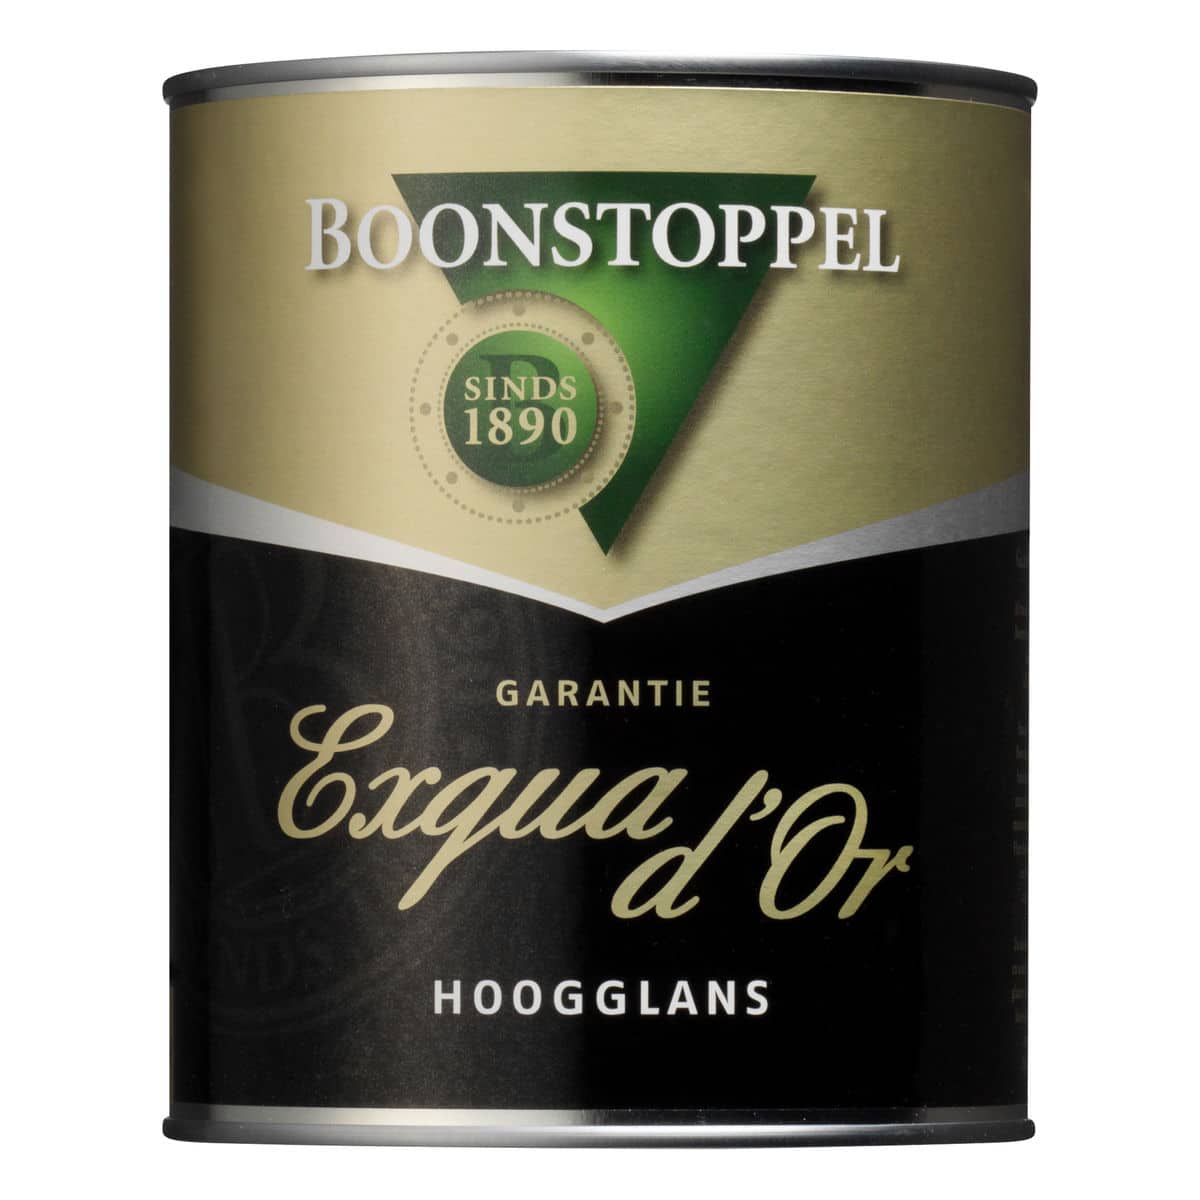 Boonstoppel Garantie Exqua d’Or Hoogglans